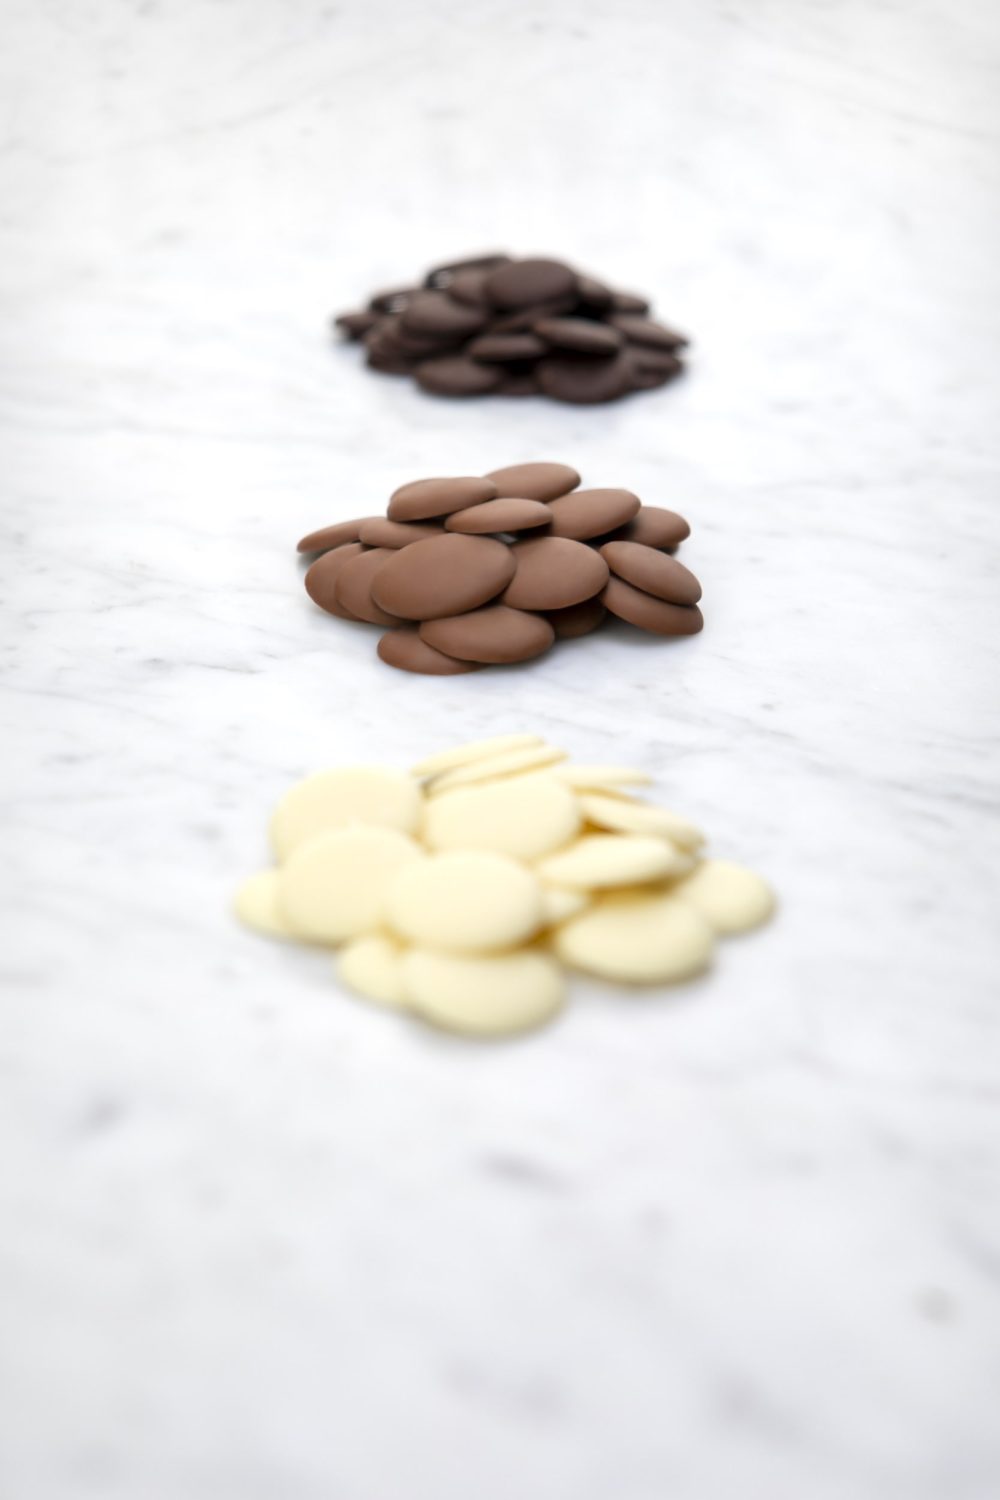 Domori Professional Line Couverture Chocolate Drops